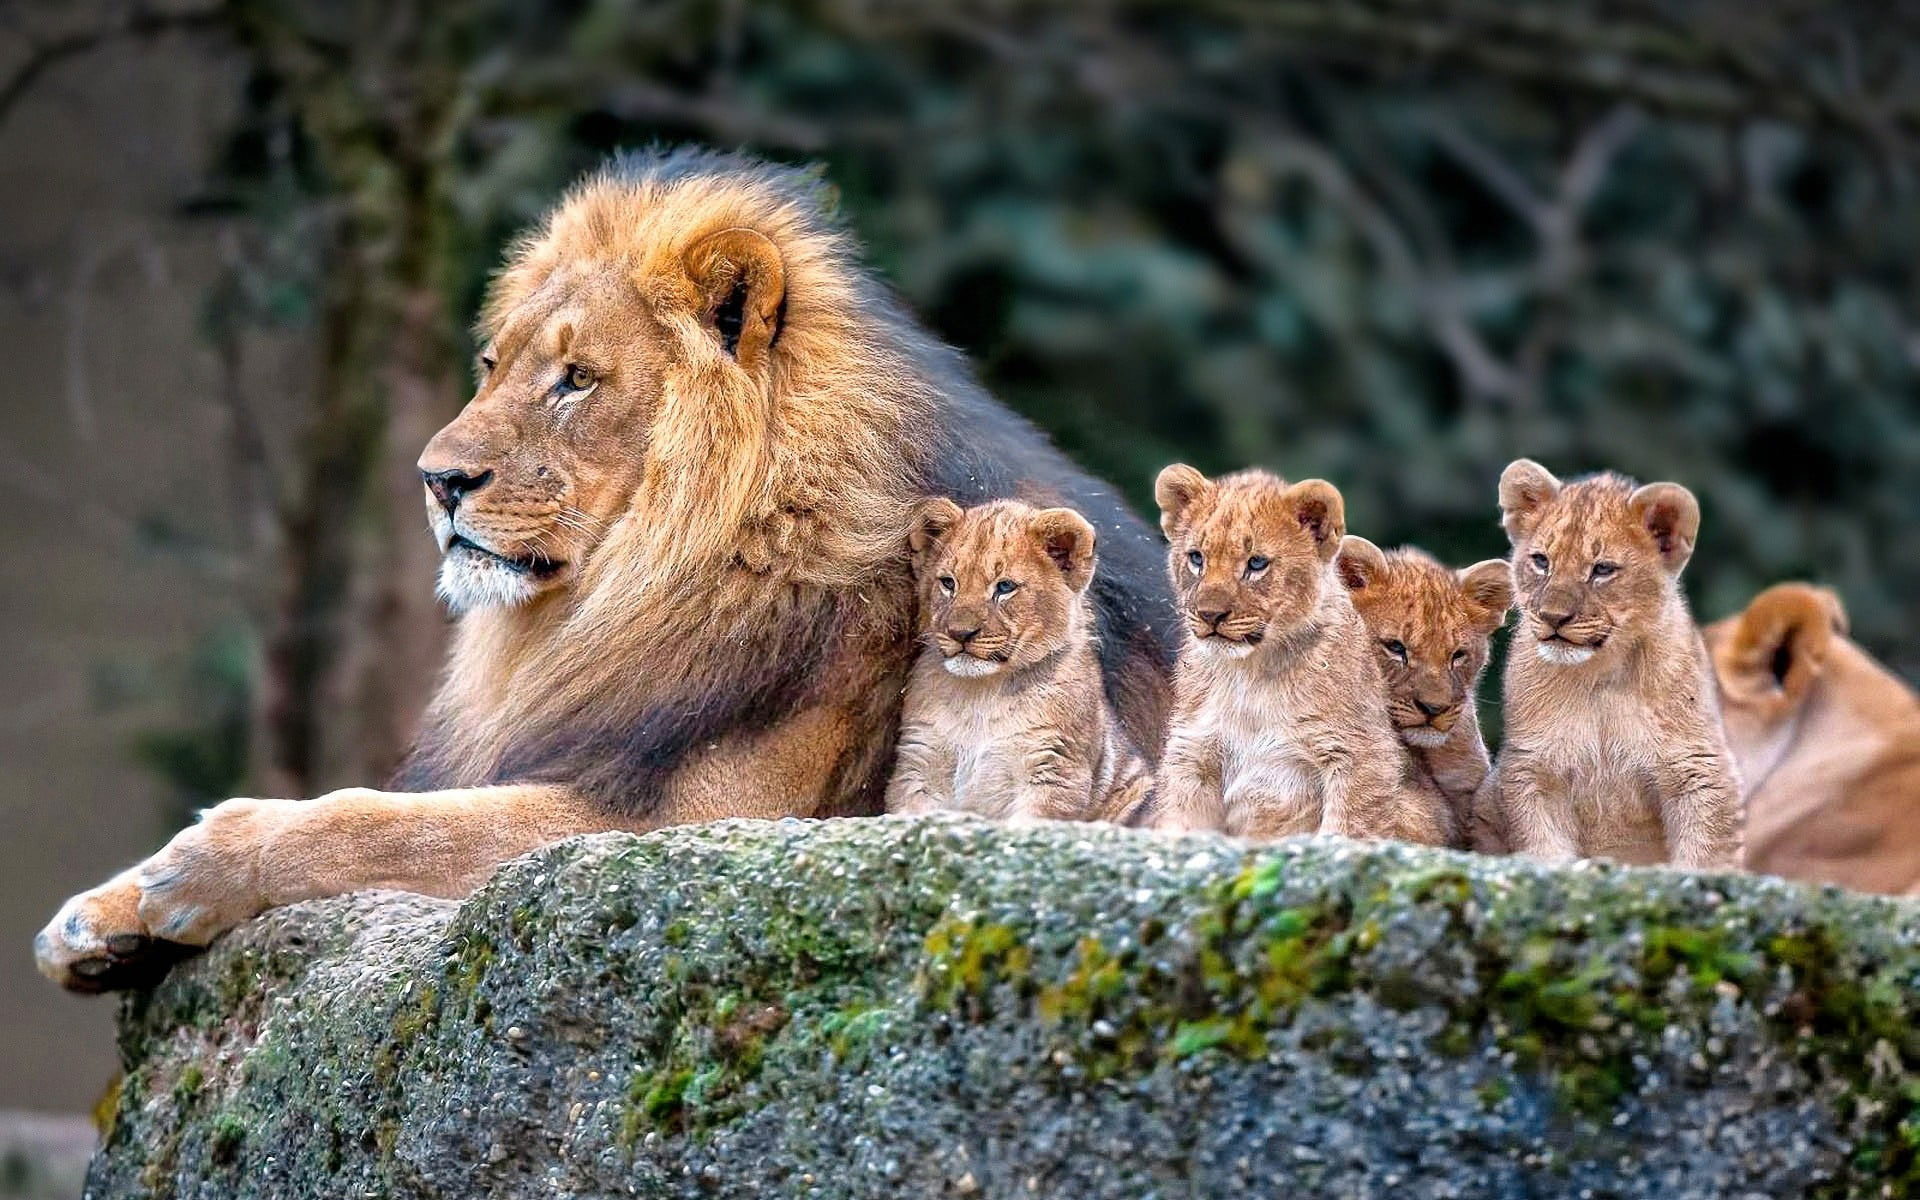 Lion and baby lions, Nature's wonder, Animals' bond, Majestic beauty, 1920x1200 HD Desktop